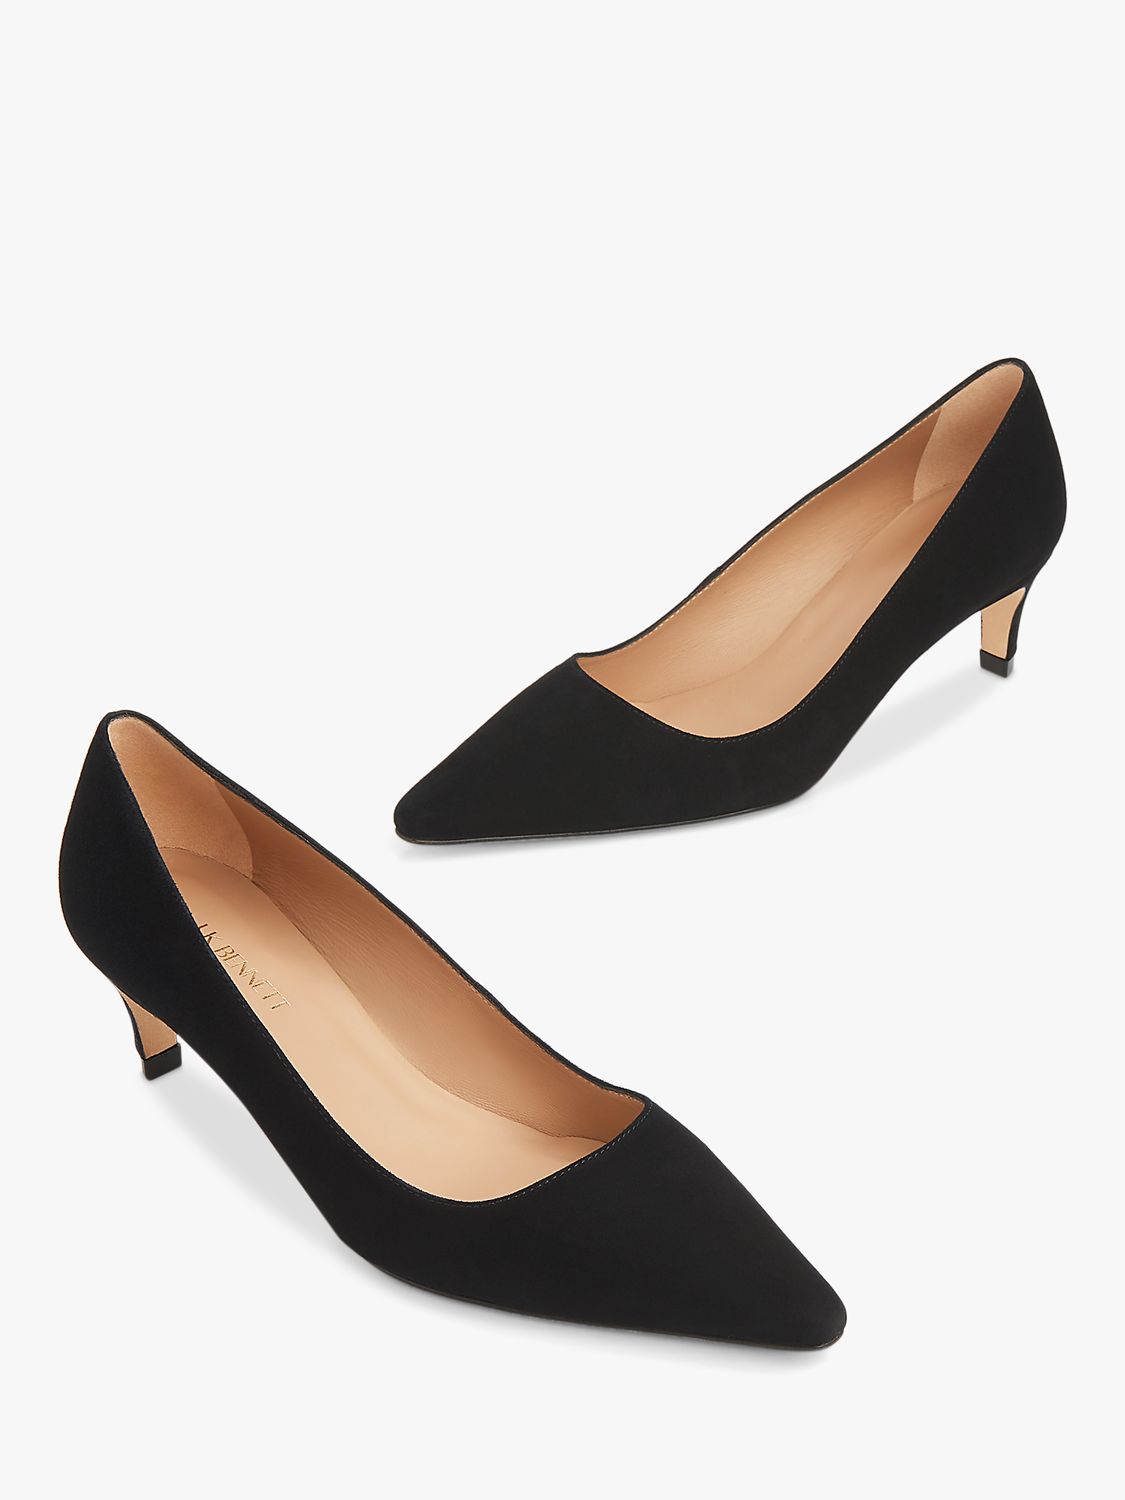 L.K.Bennett Ava Suede Kitten Heel Court Shoes, Black, 8